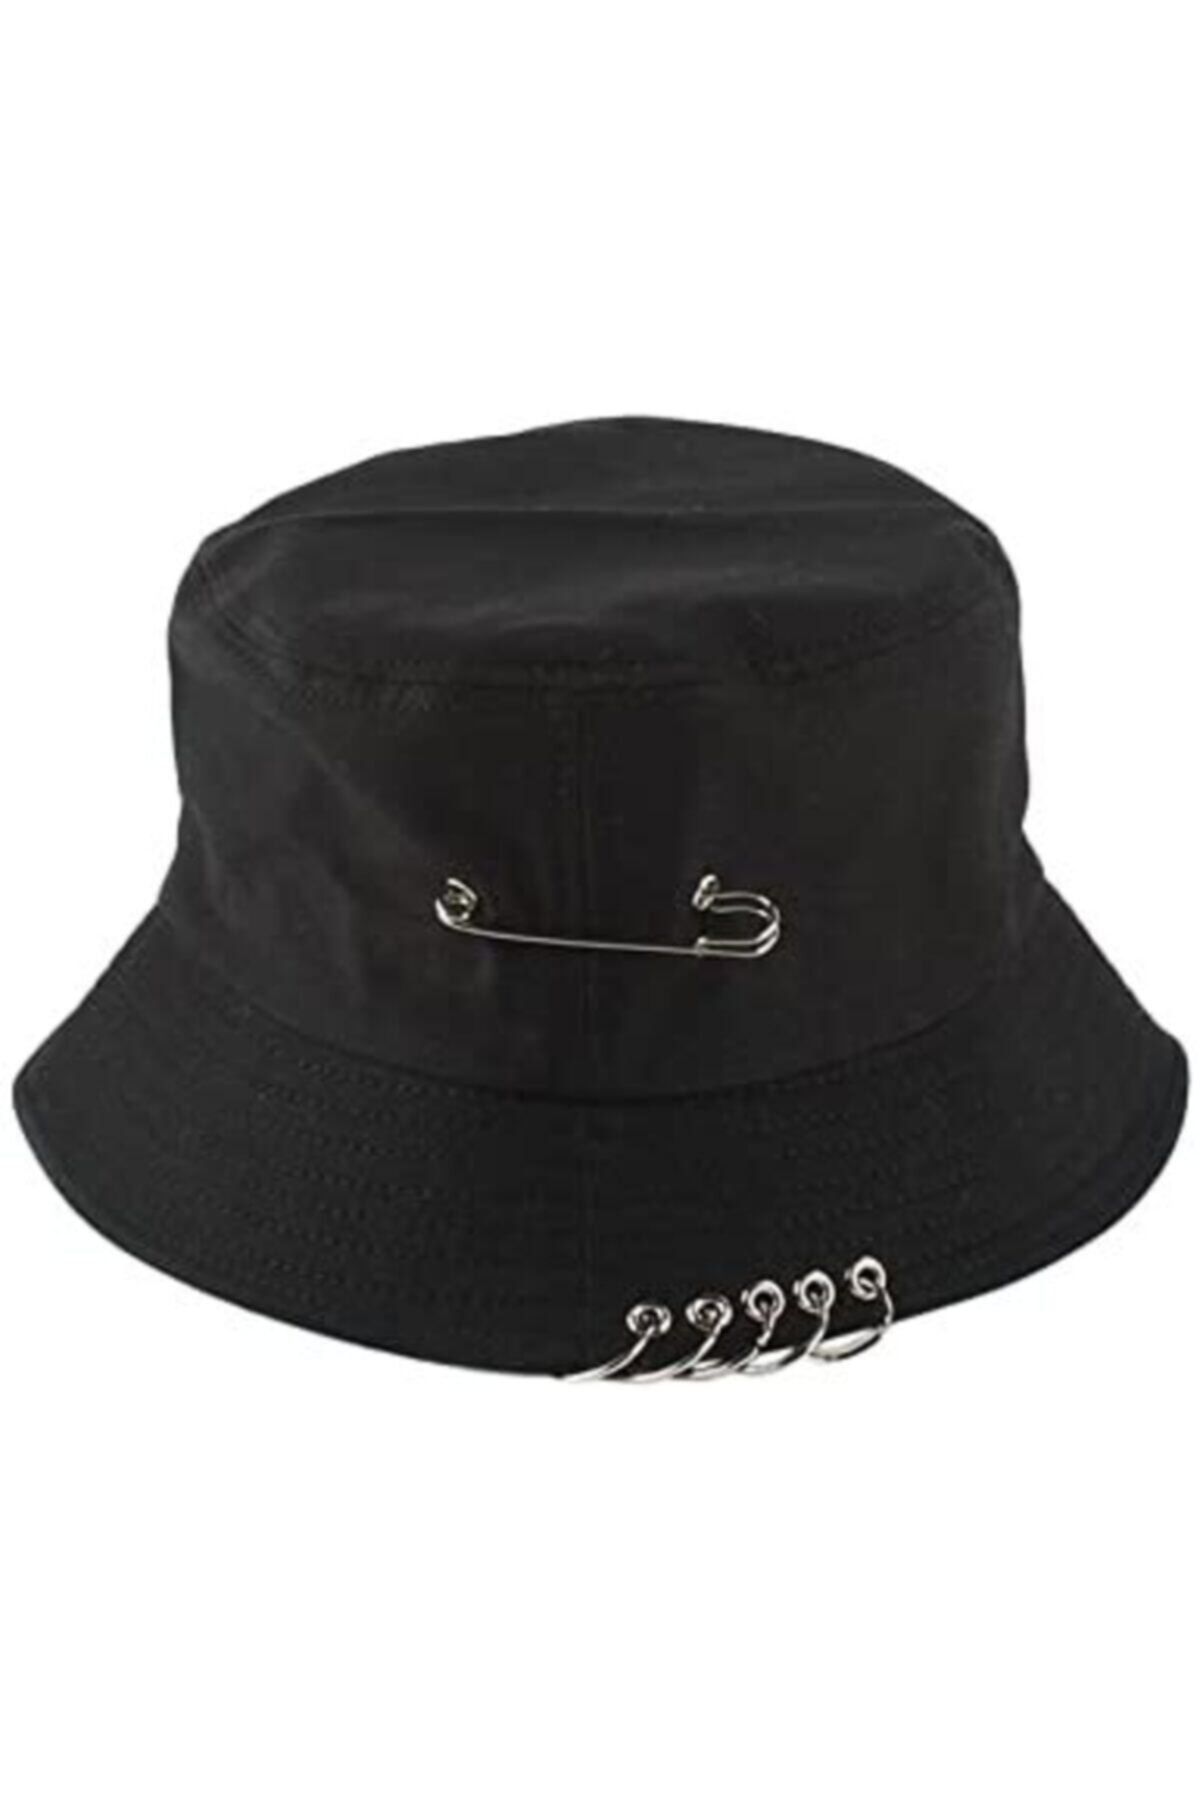 Köstebek Piercingli Siyah Bucket Hat Kova Şapka